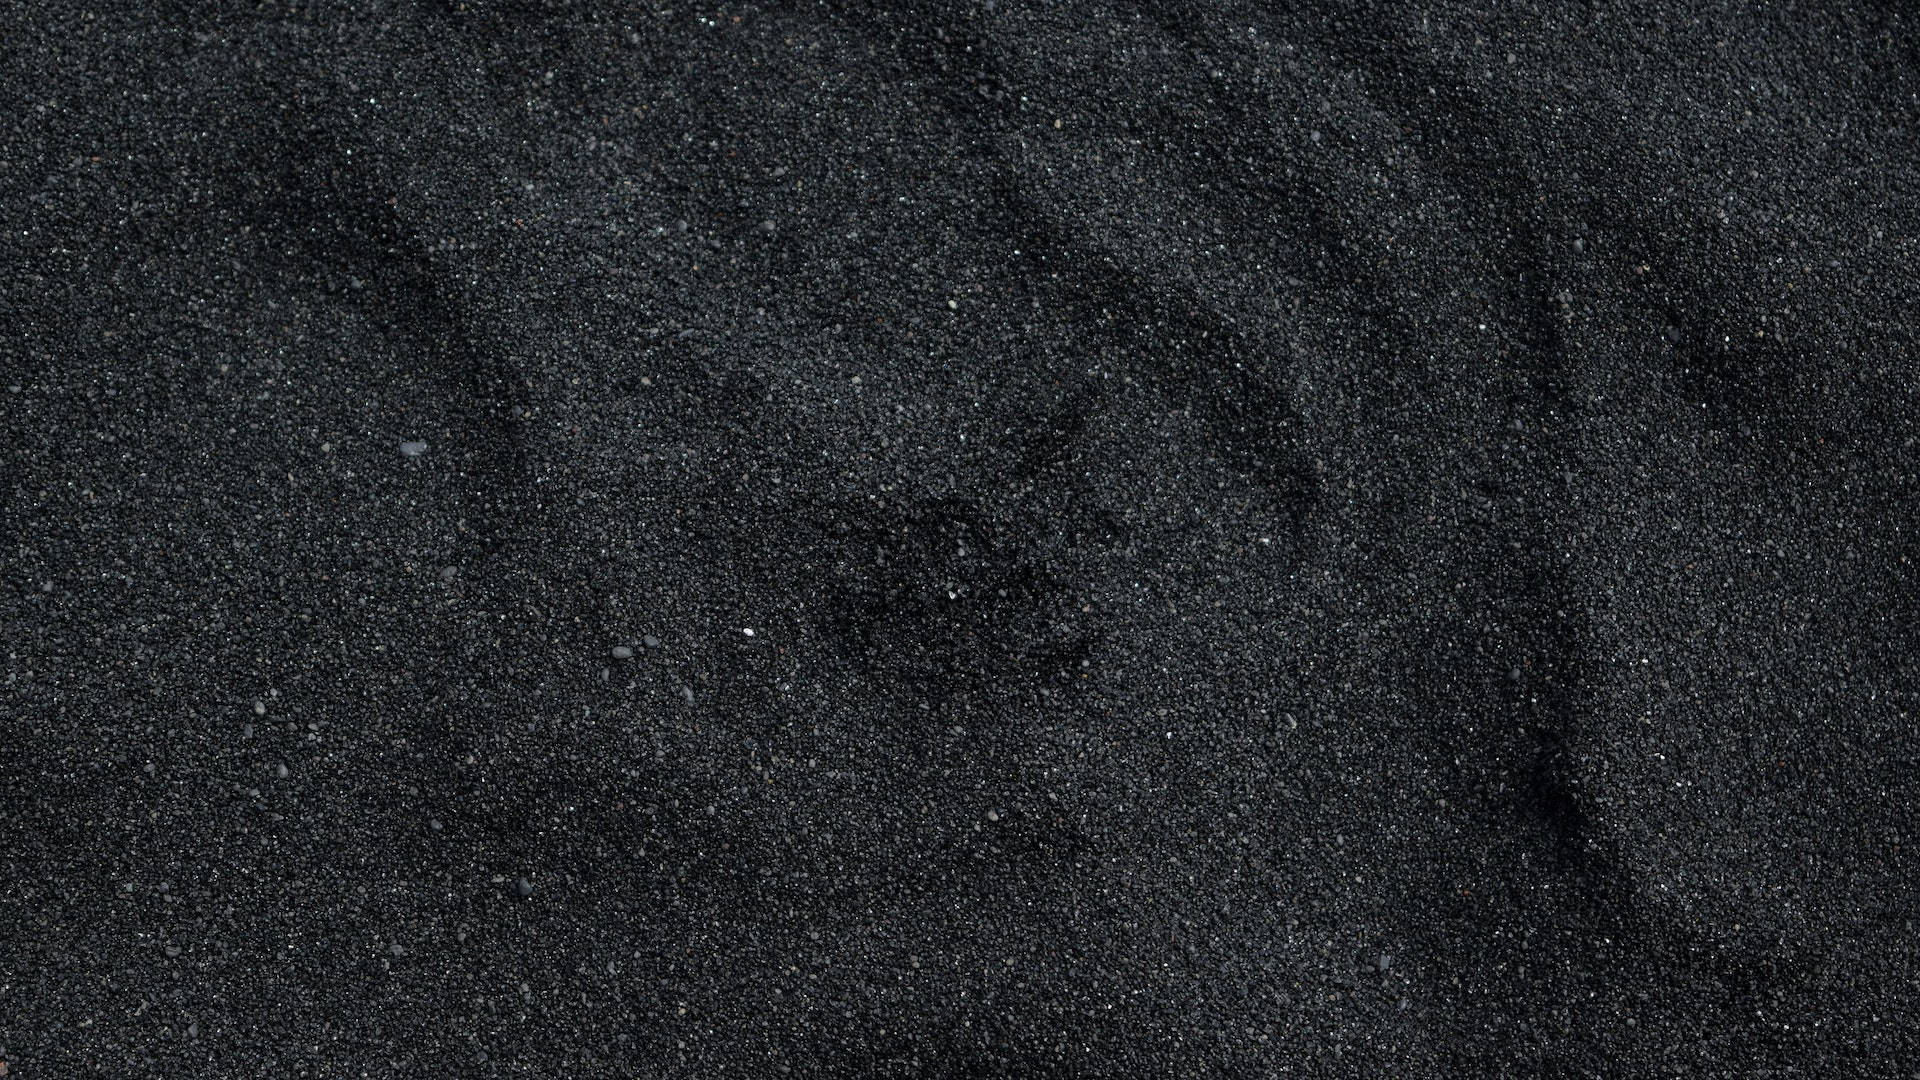 Black Desktop Grain Of Sand Background